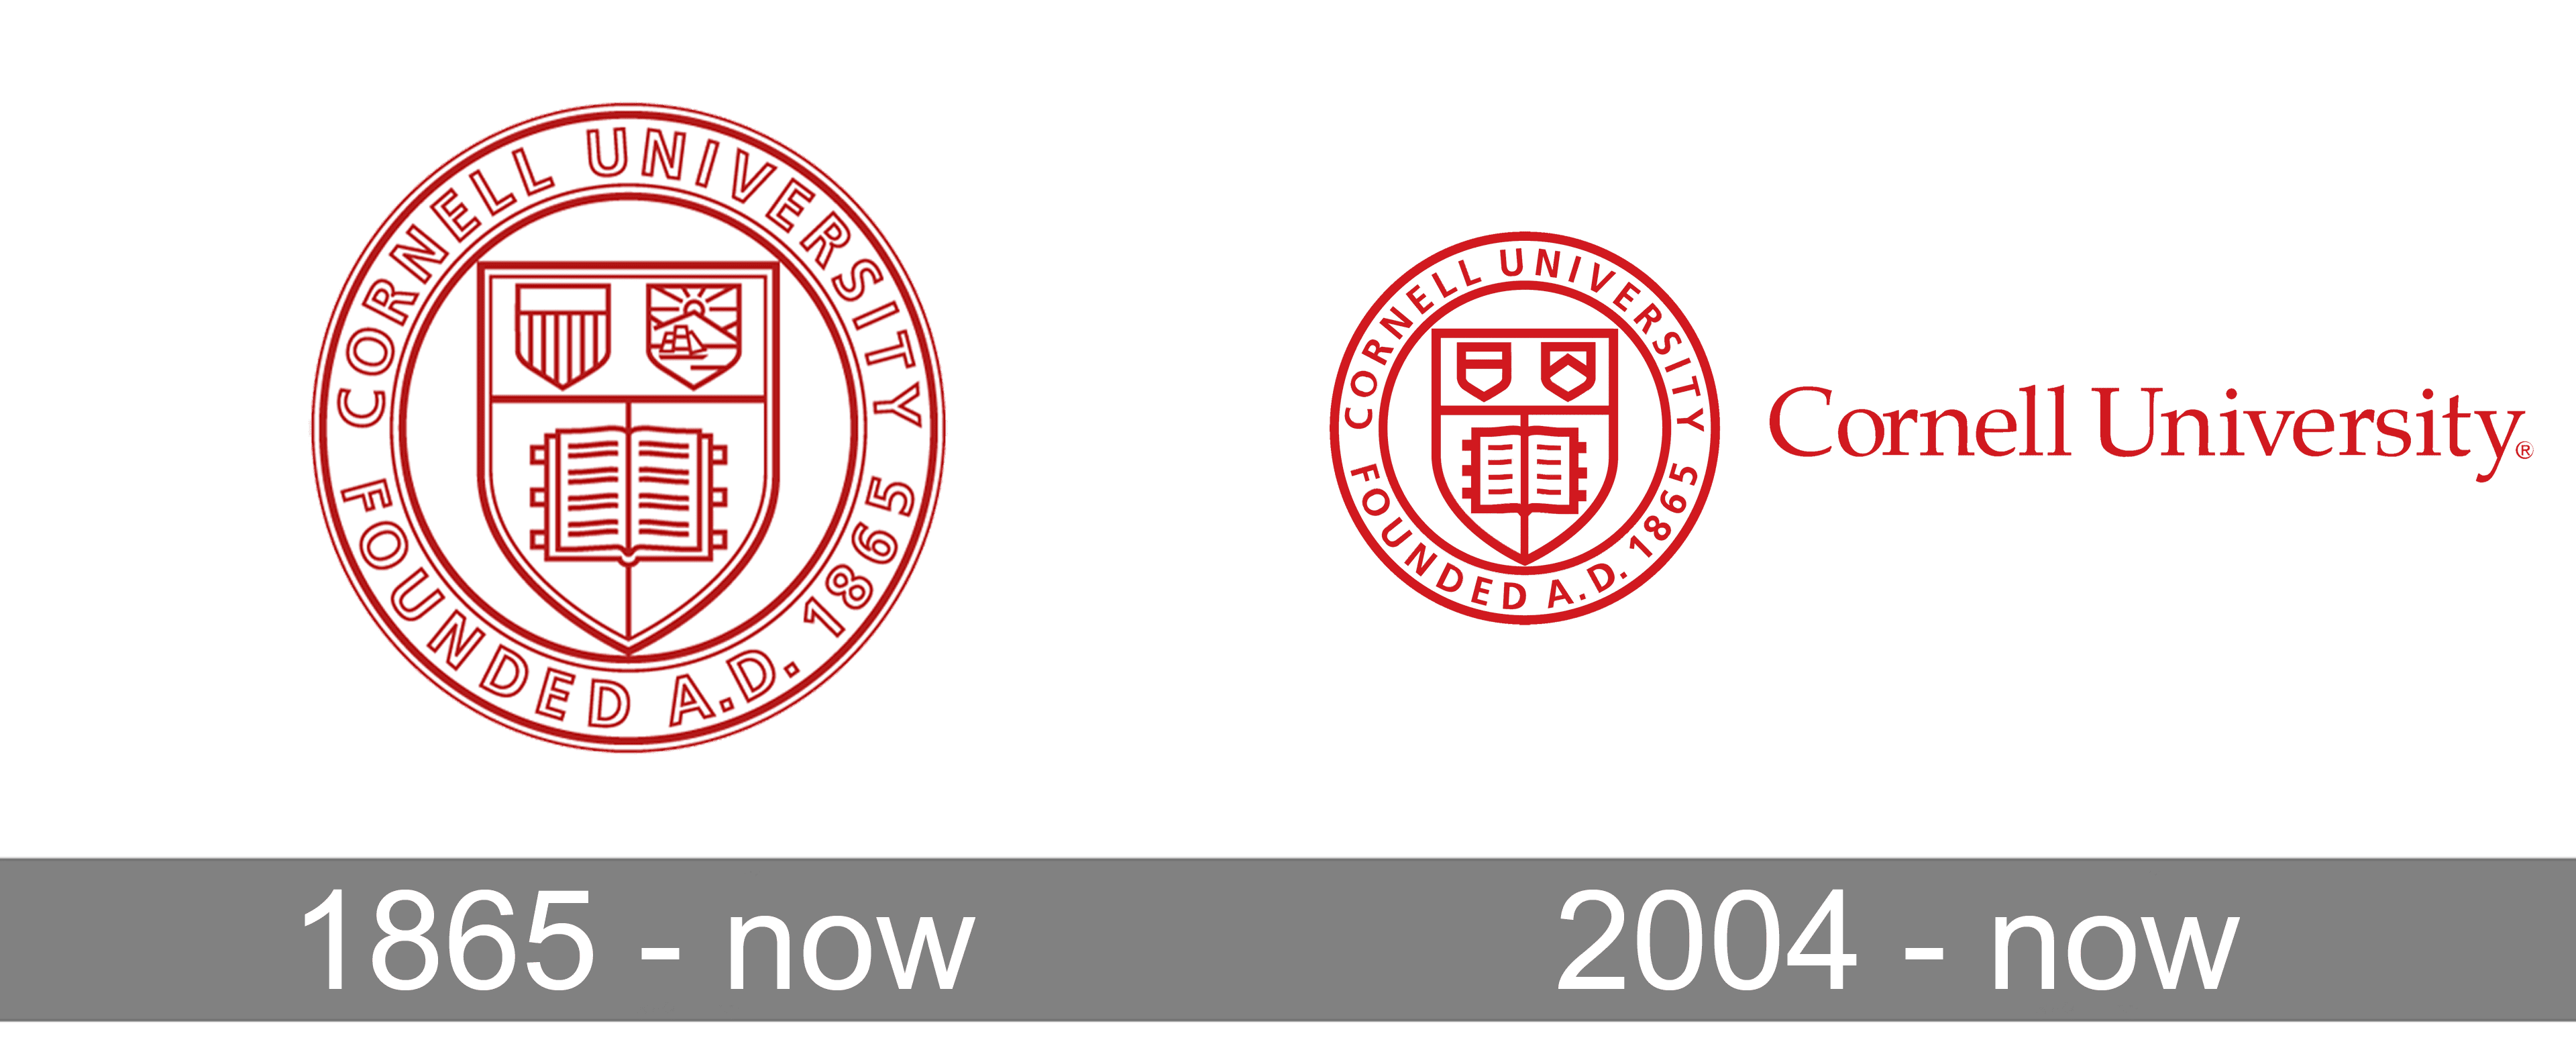 Cornell University Logo History 